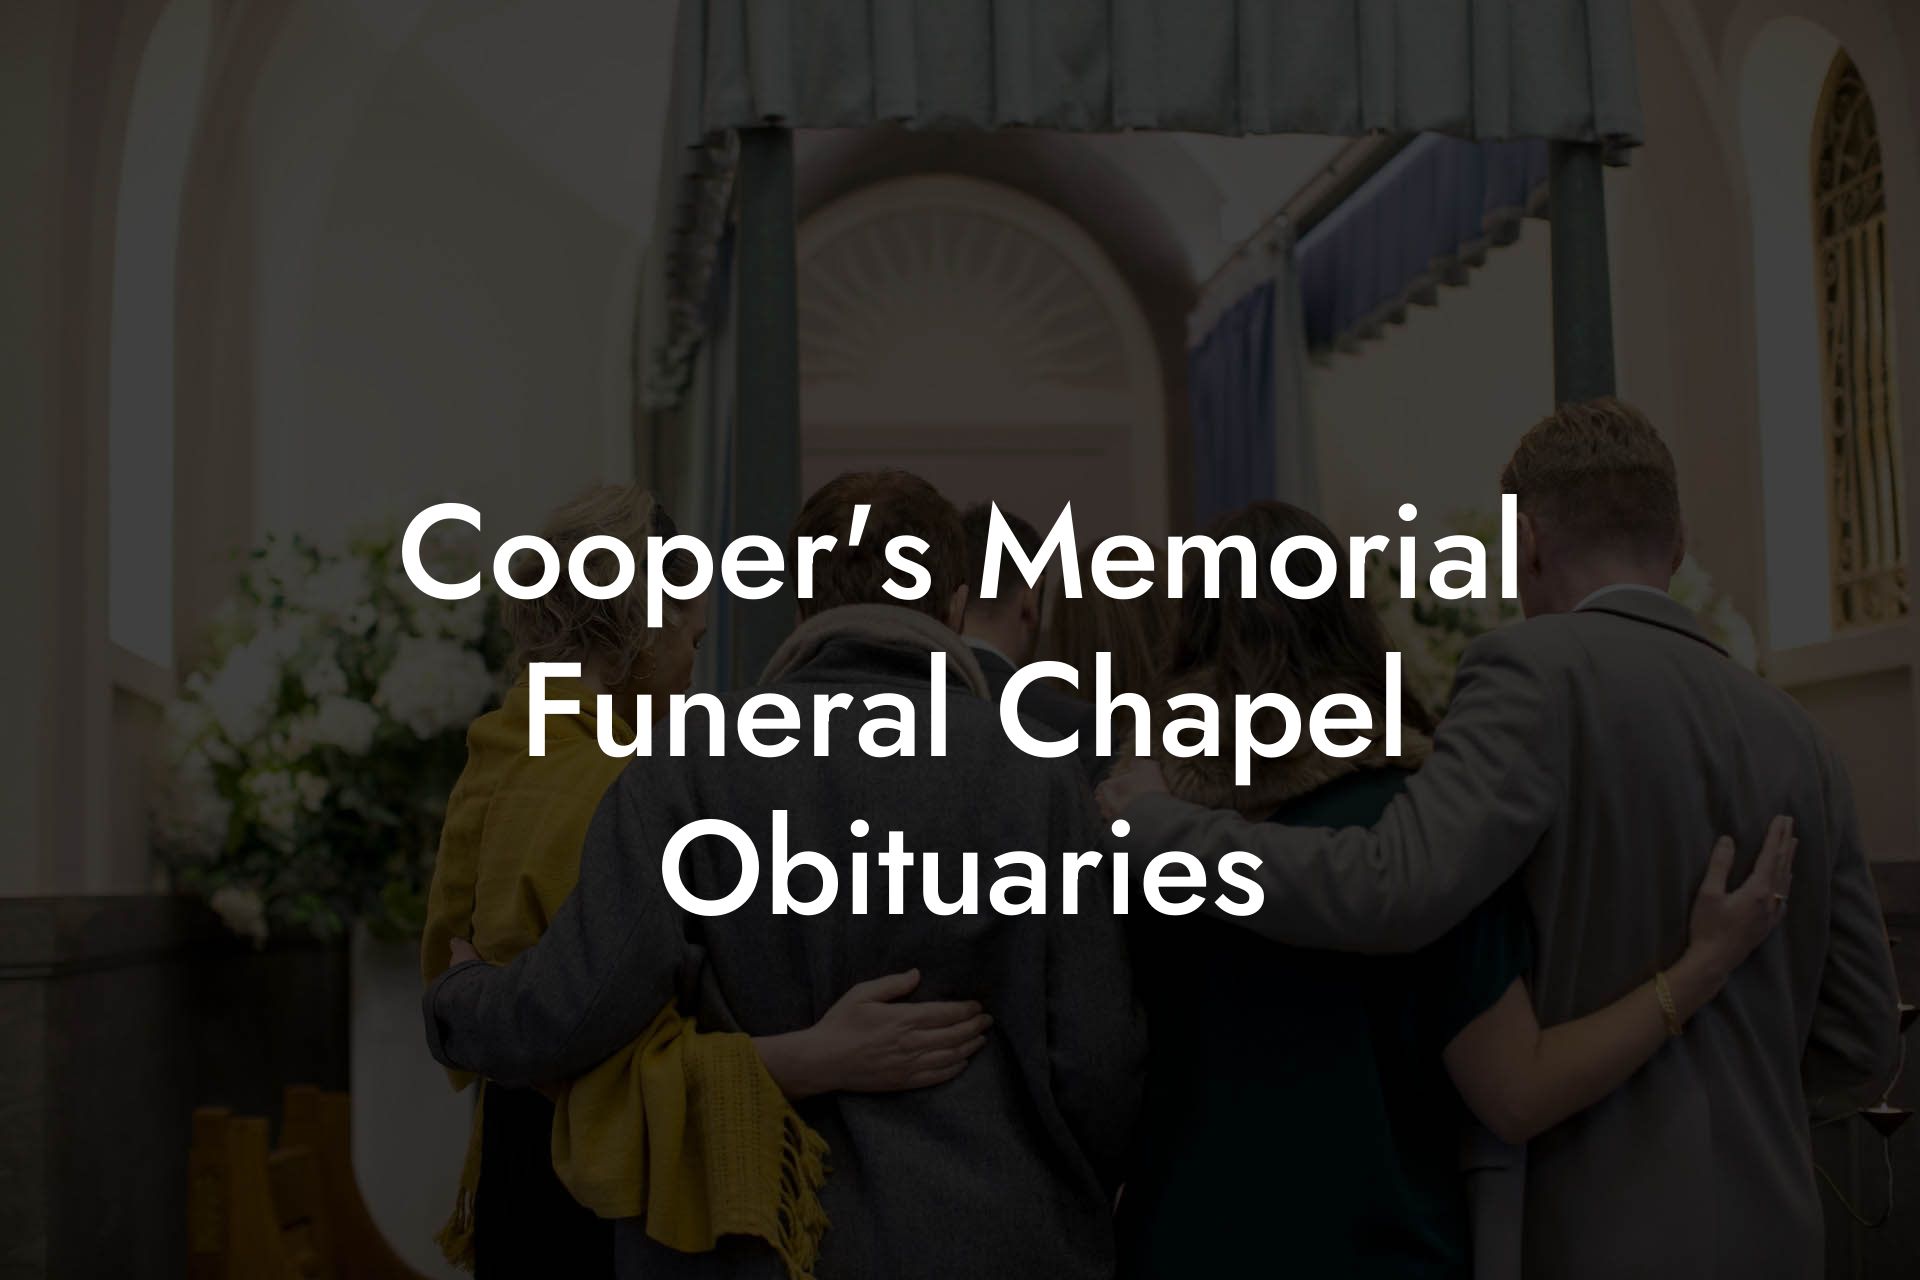 Cooper's Memorial Funeral Chapel Obituaries